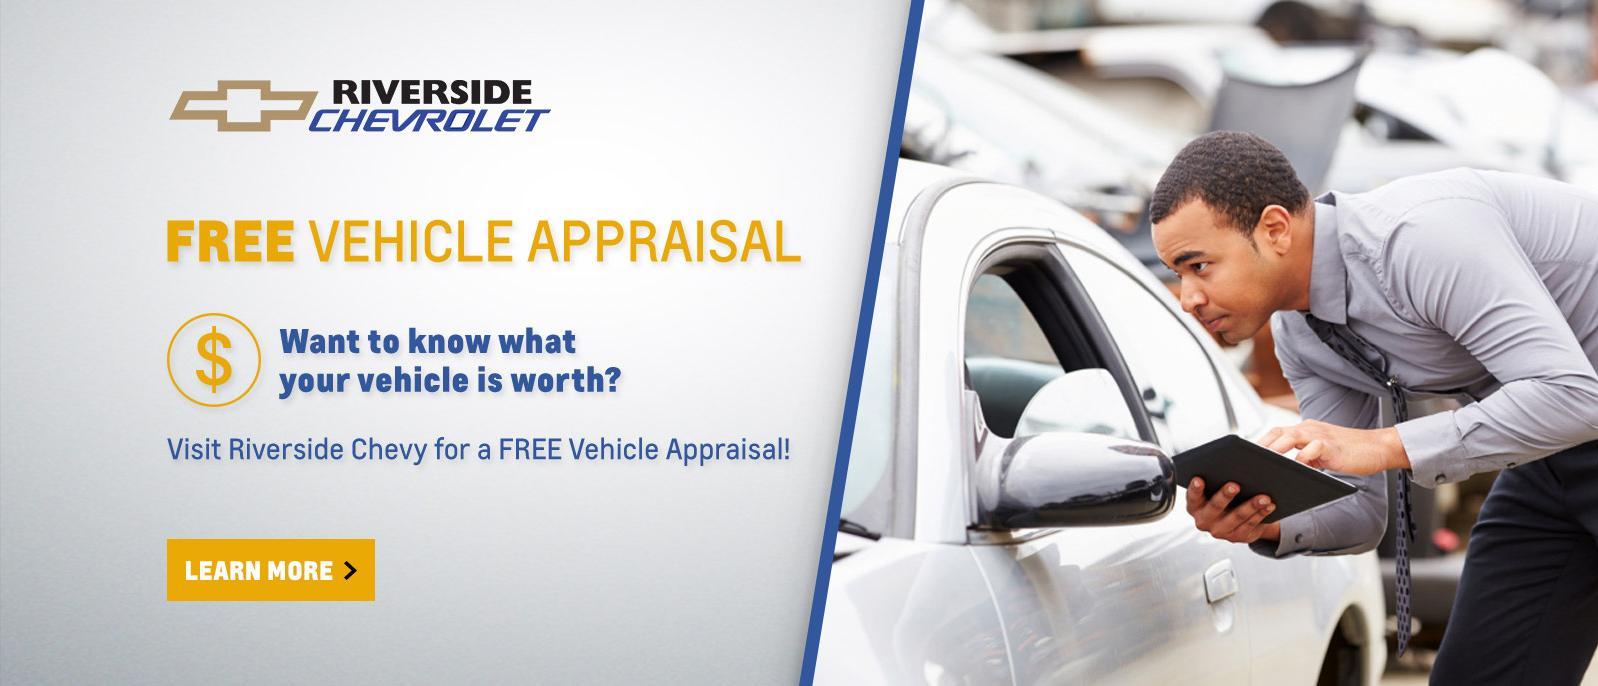 Riverside Chevrolet Free Vehicle Appraisal